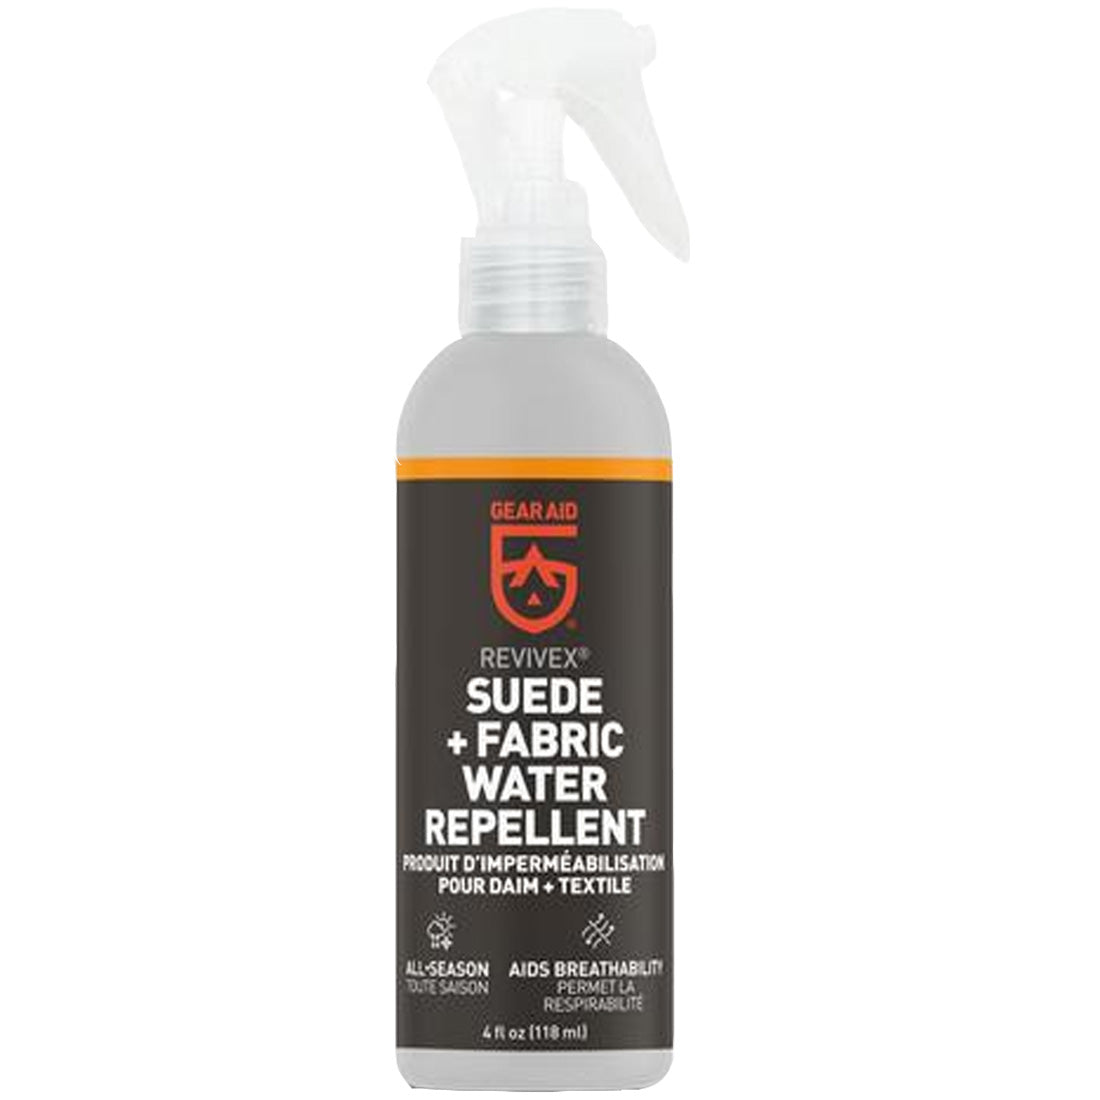 Gear Aid Revivex Suede+Fabric Water Repellent - 4oz